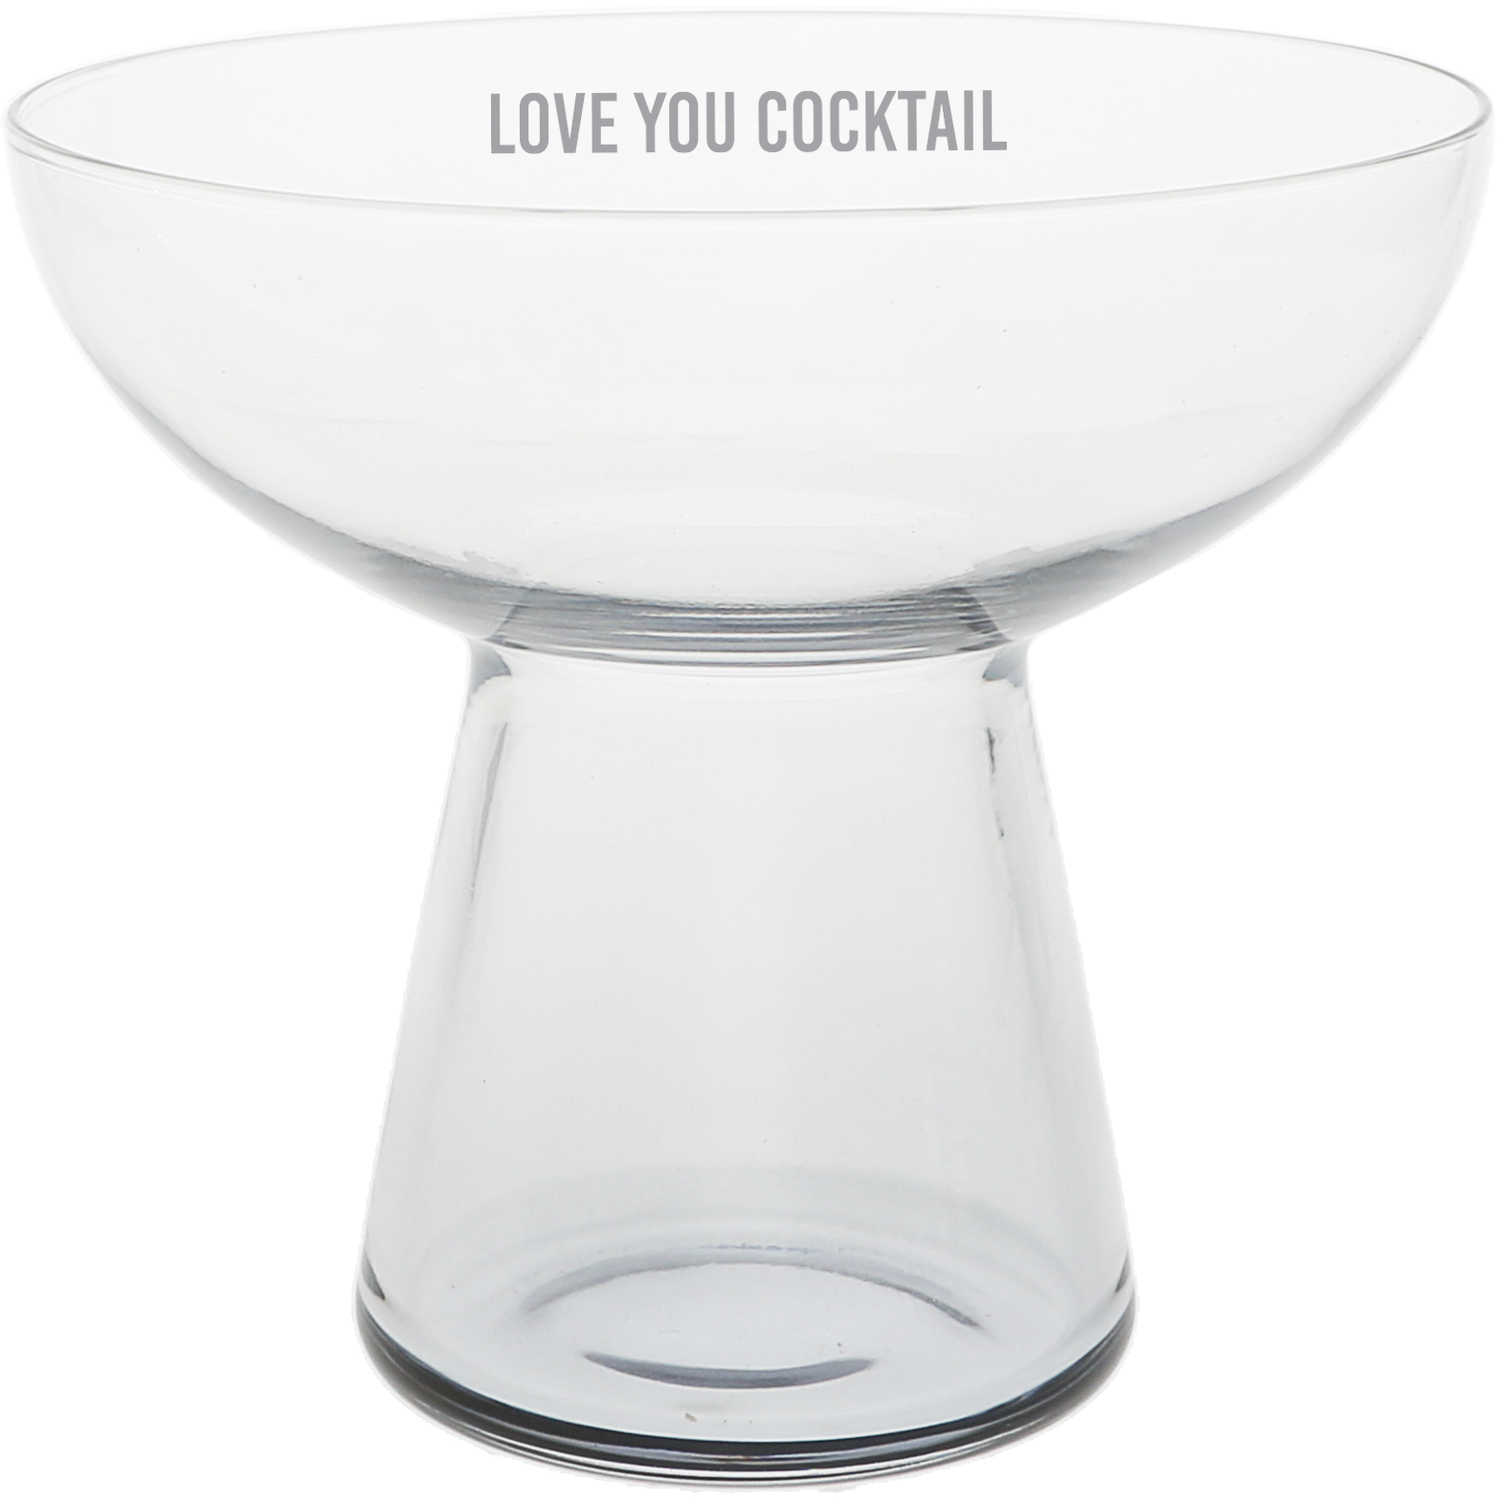 Love You Cocktail by Love You - Love You Cocktail - 15 oz Cocktail Glass